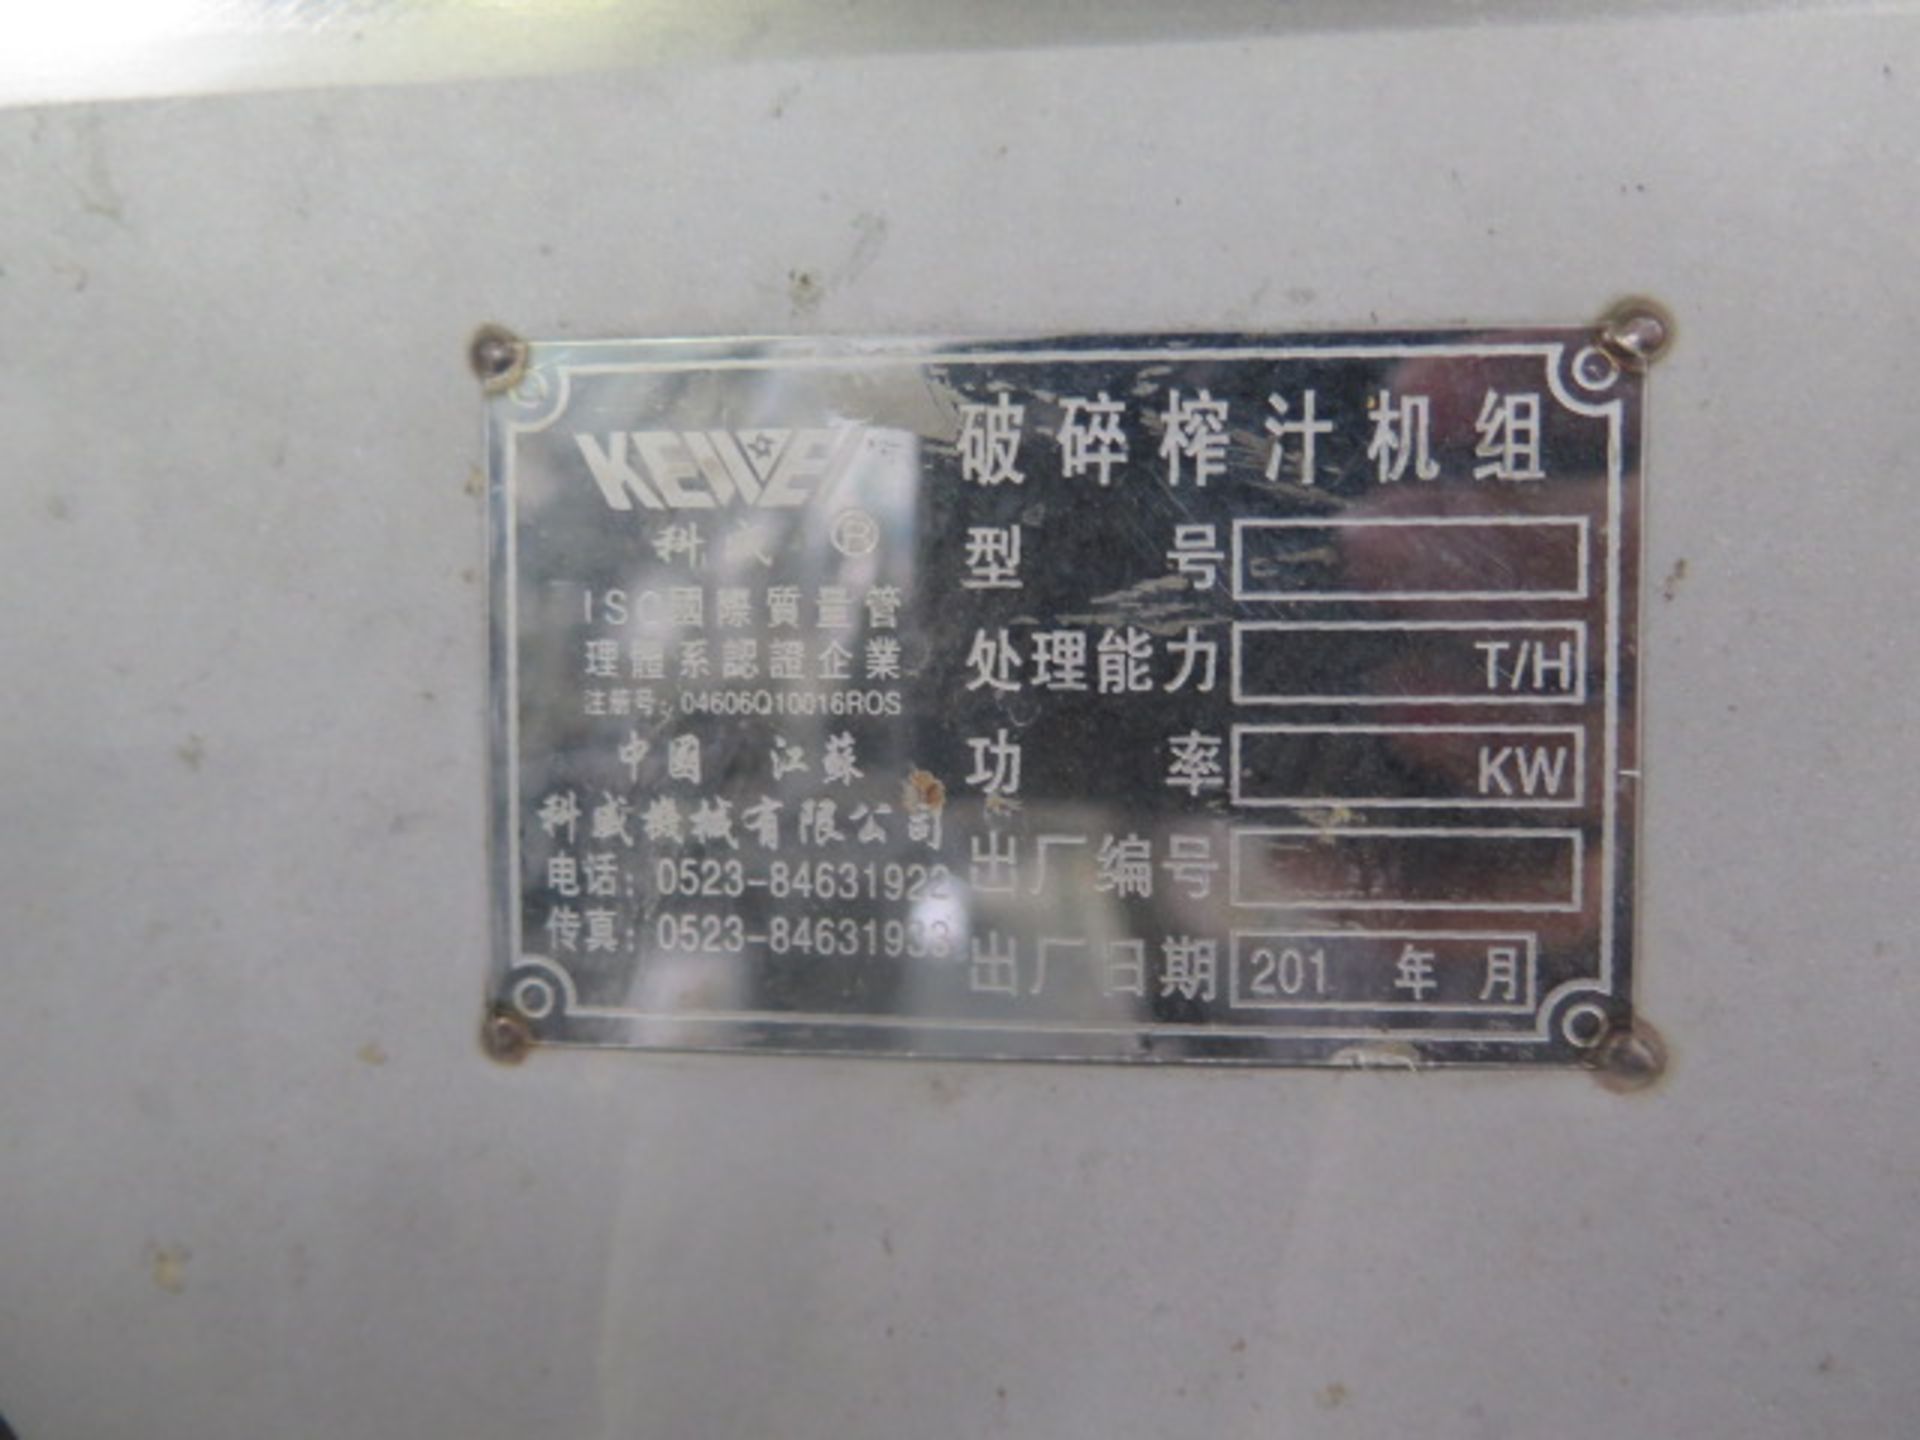 Kewei Industrial Meat Grinder (SOLD AS-IS - NO WARRANTY) - Image 8 of 8